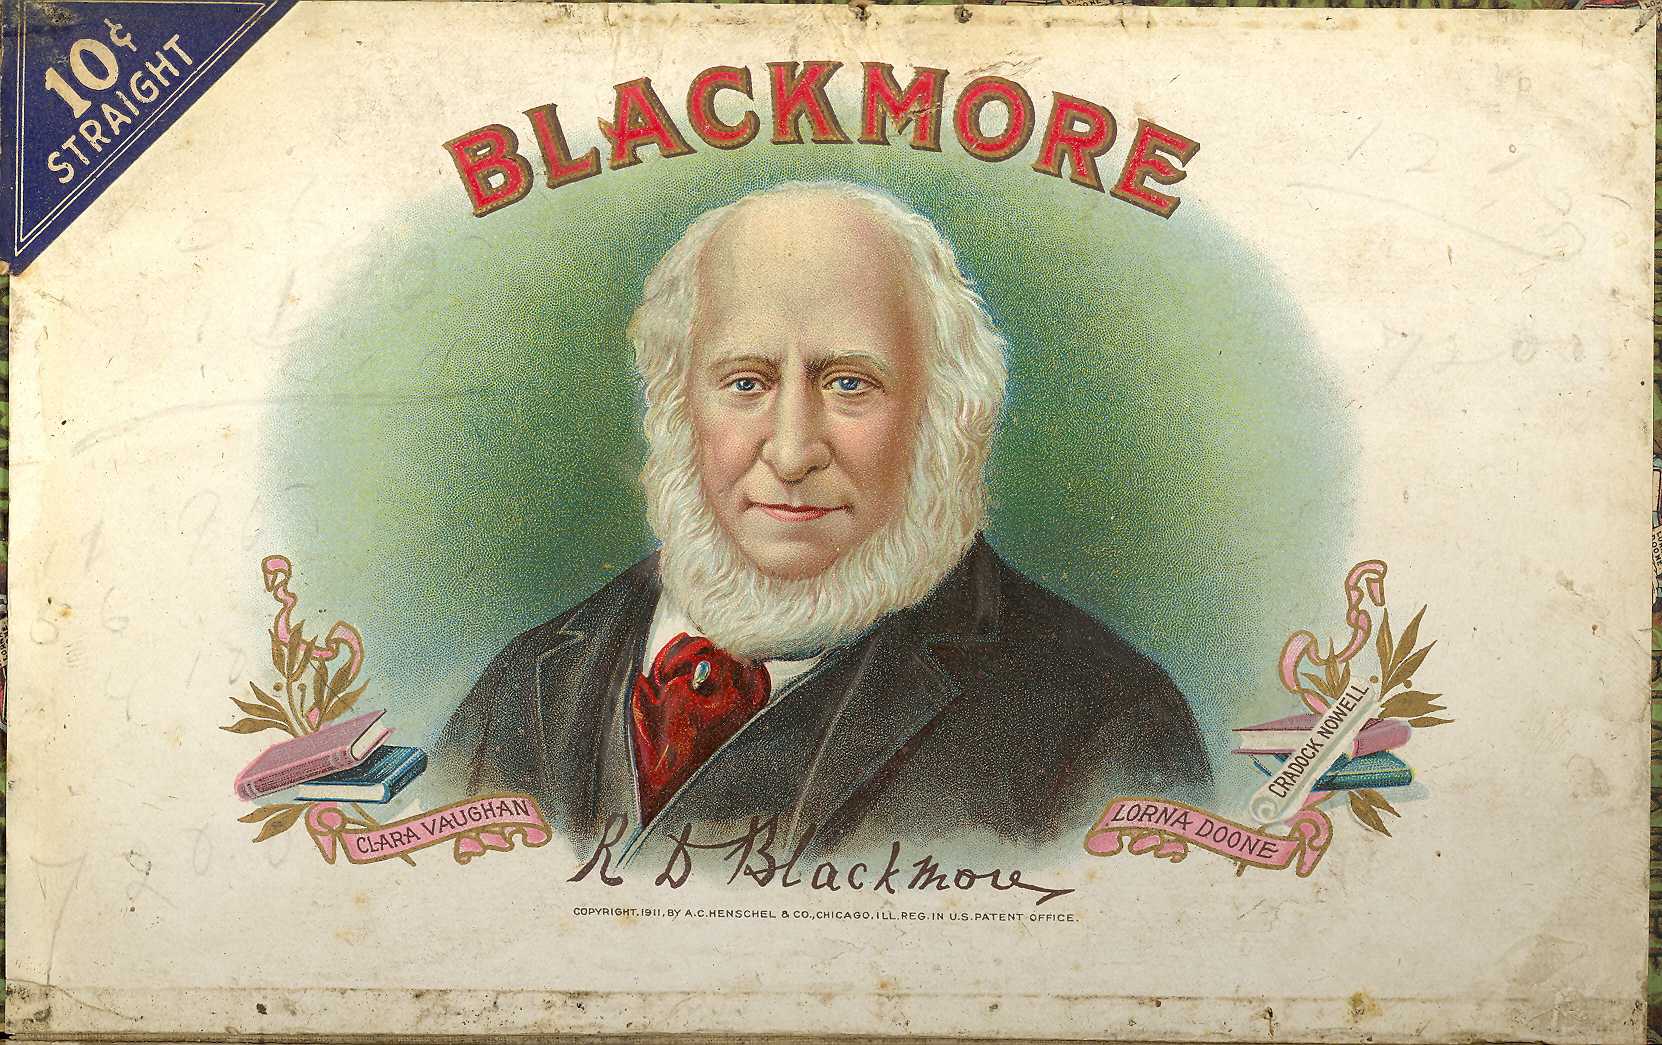 Blackmore Cigar Box Label, North Manchester